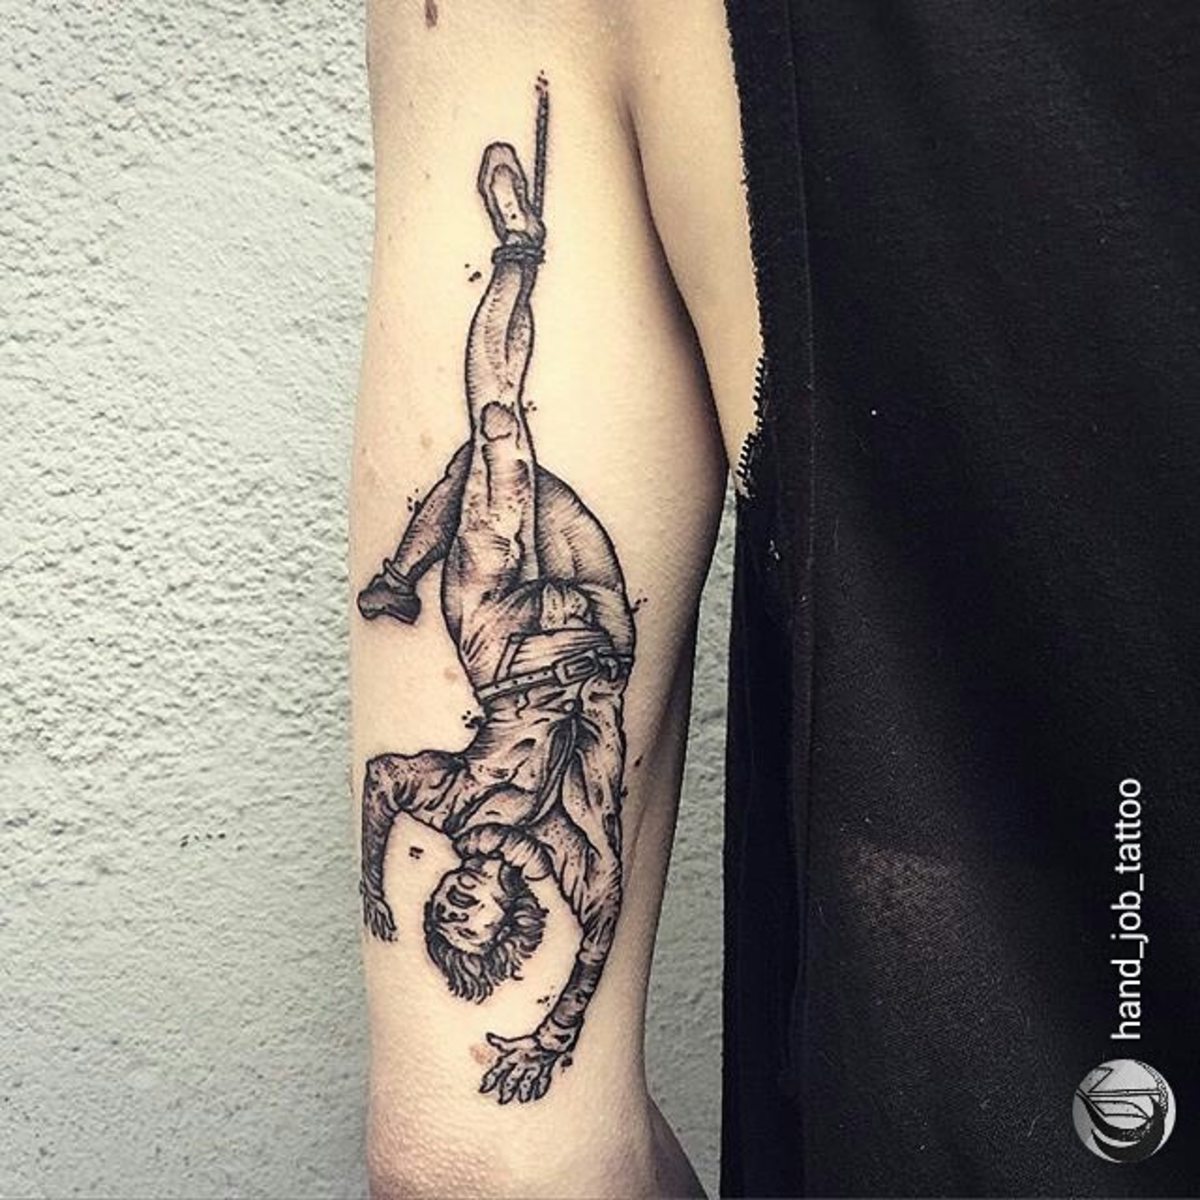 Hanged Man Tattoo by RightStuff.eu